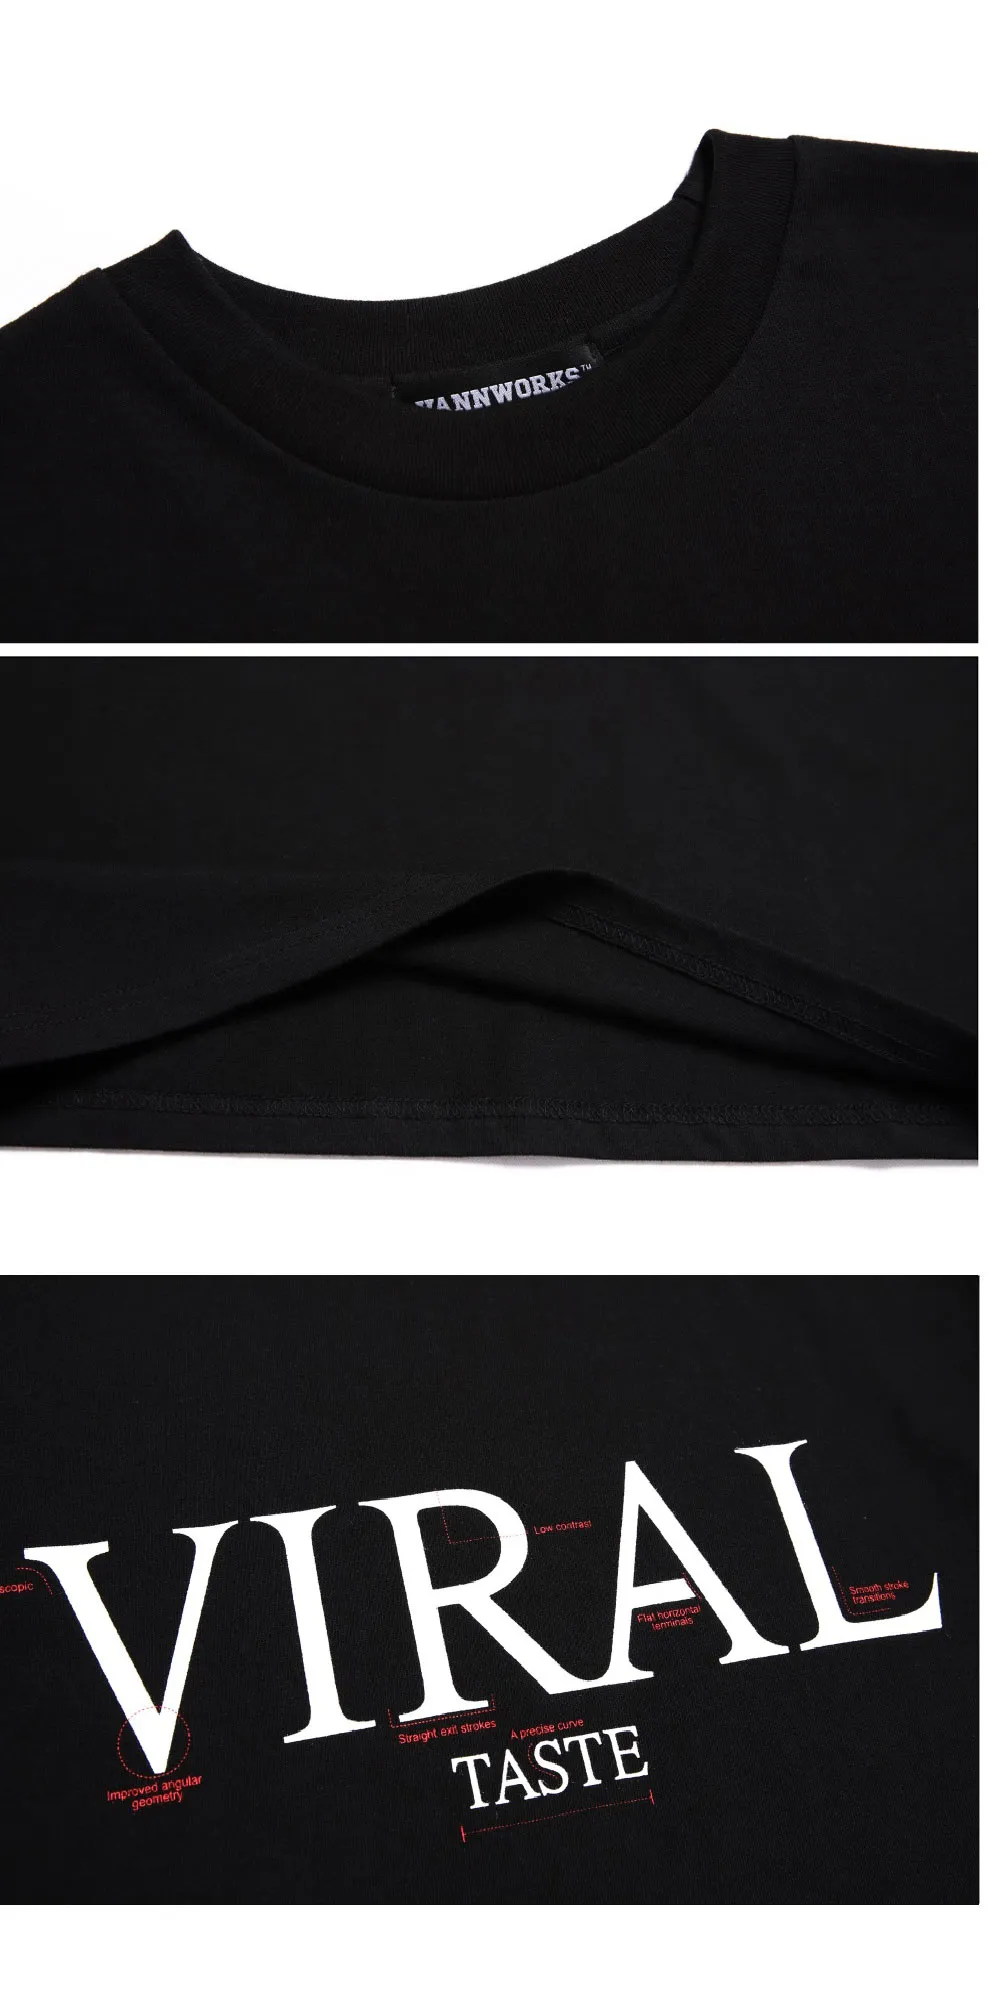 *VANNWORKS*バイラルTシャツ(VNAHTS128)ブラック | 詳細画像6